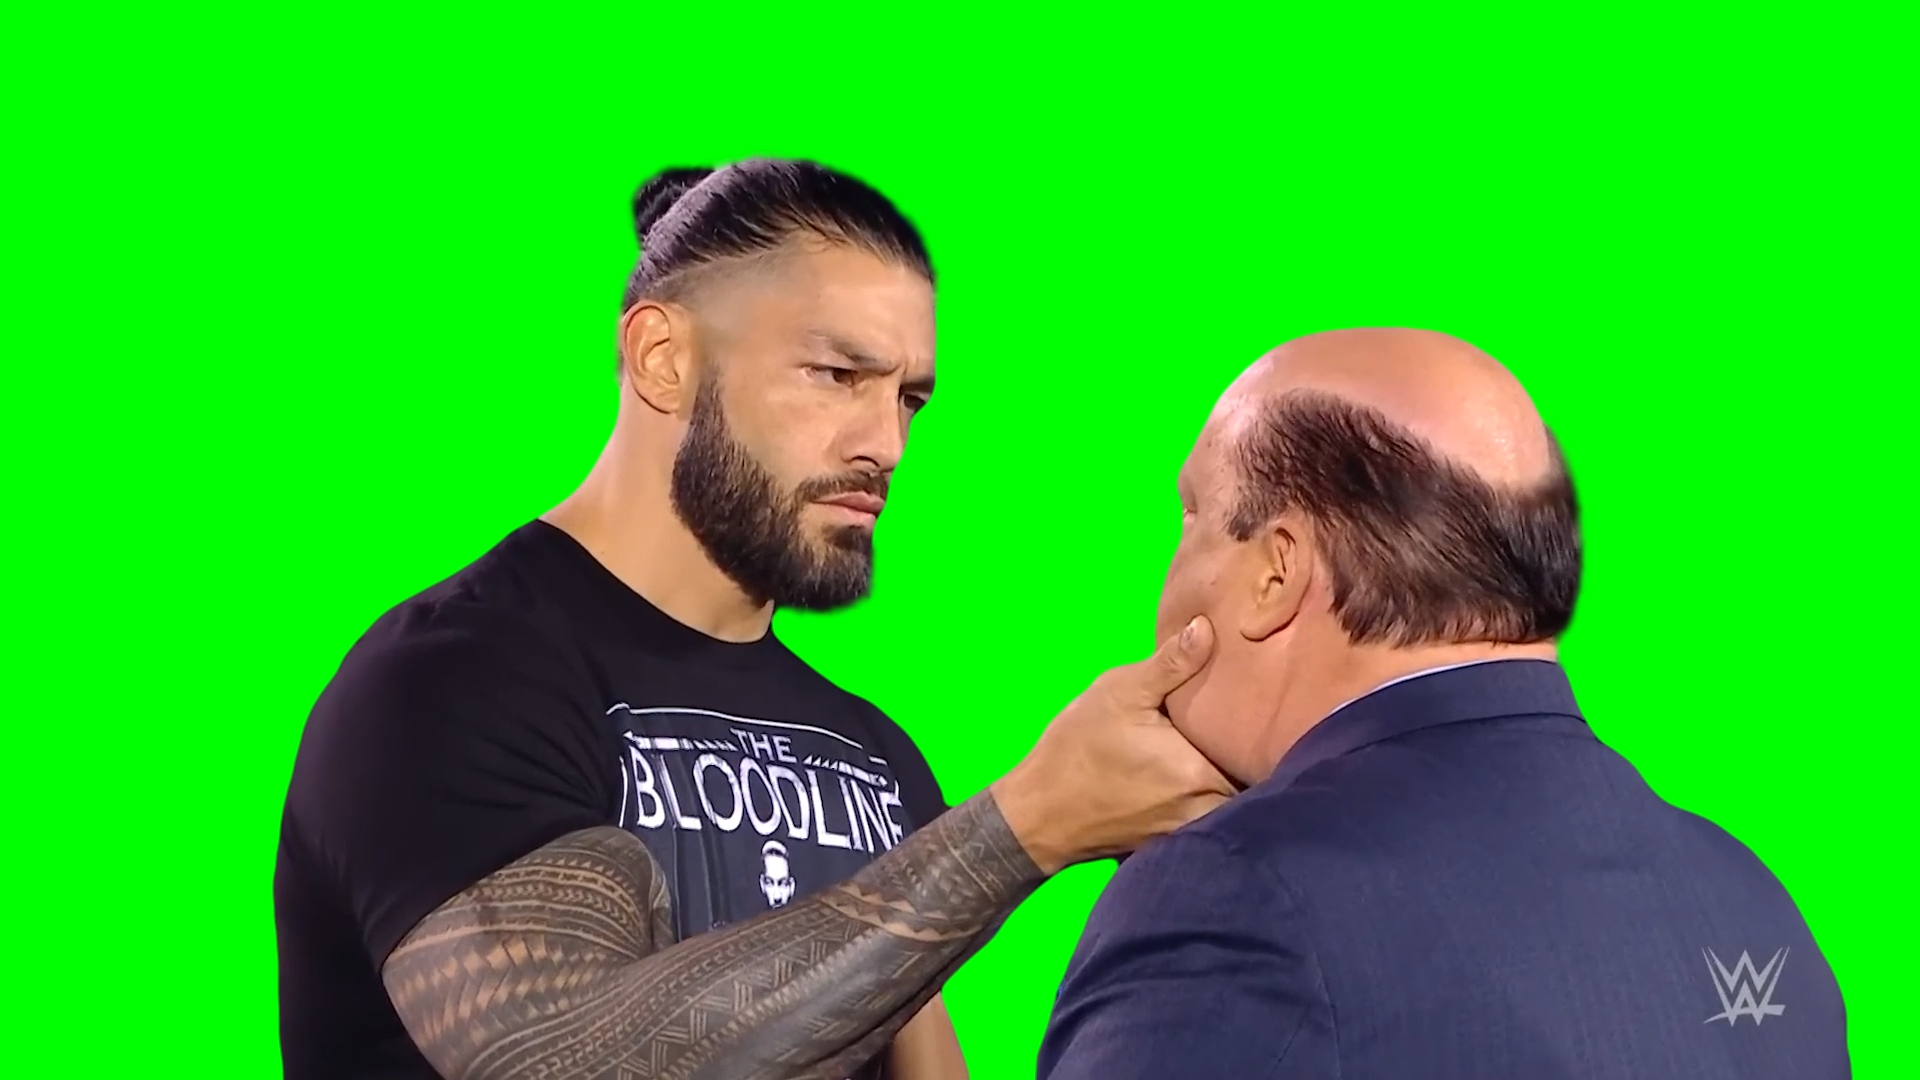 Roman Reigns Rizz - WWE meme (Green Screen)